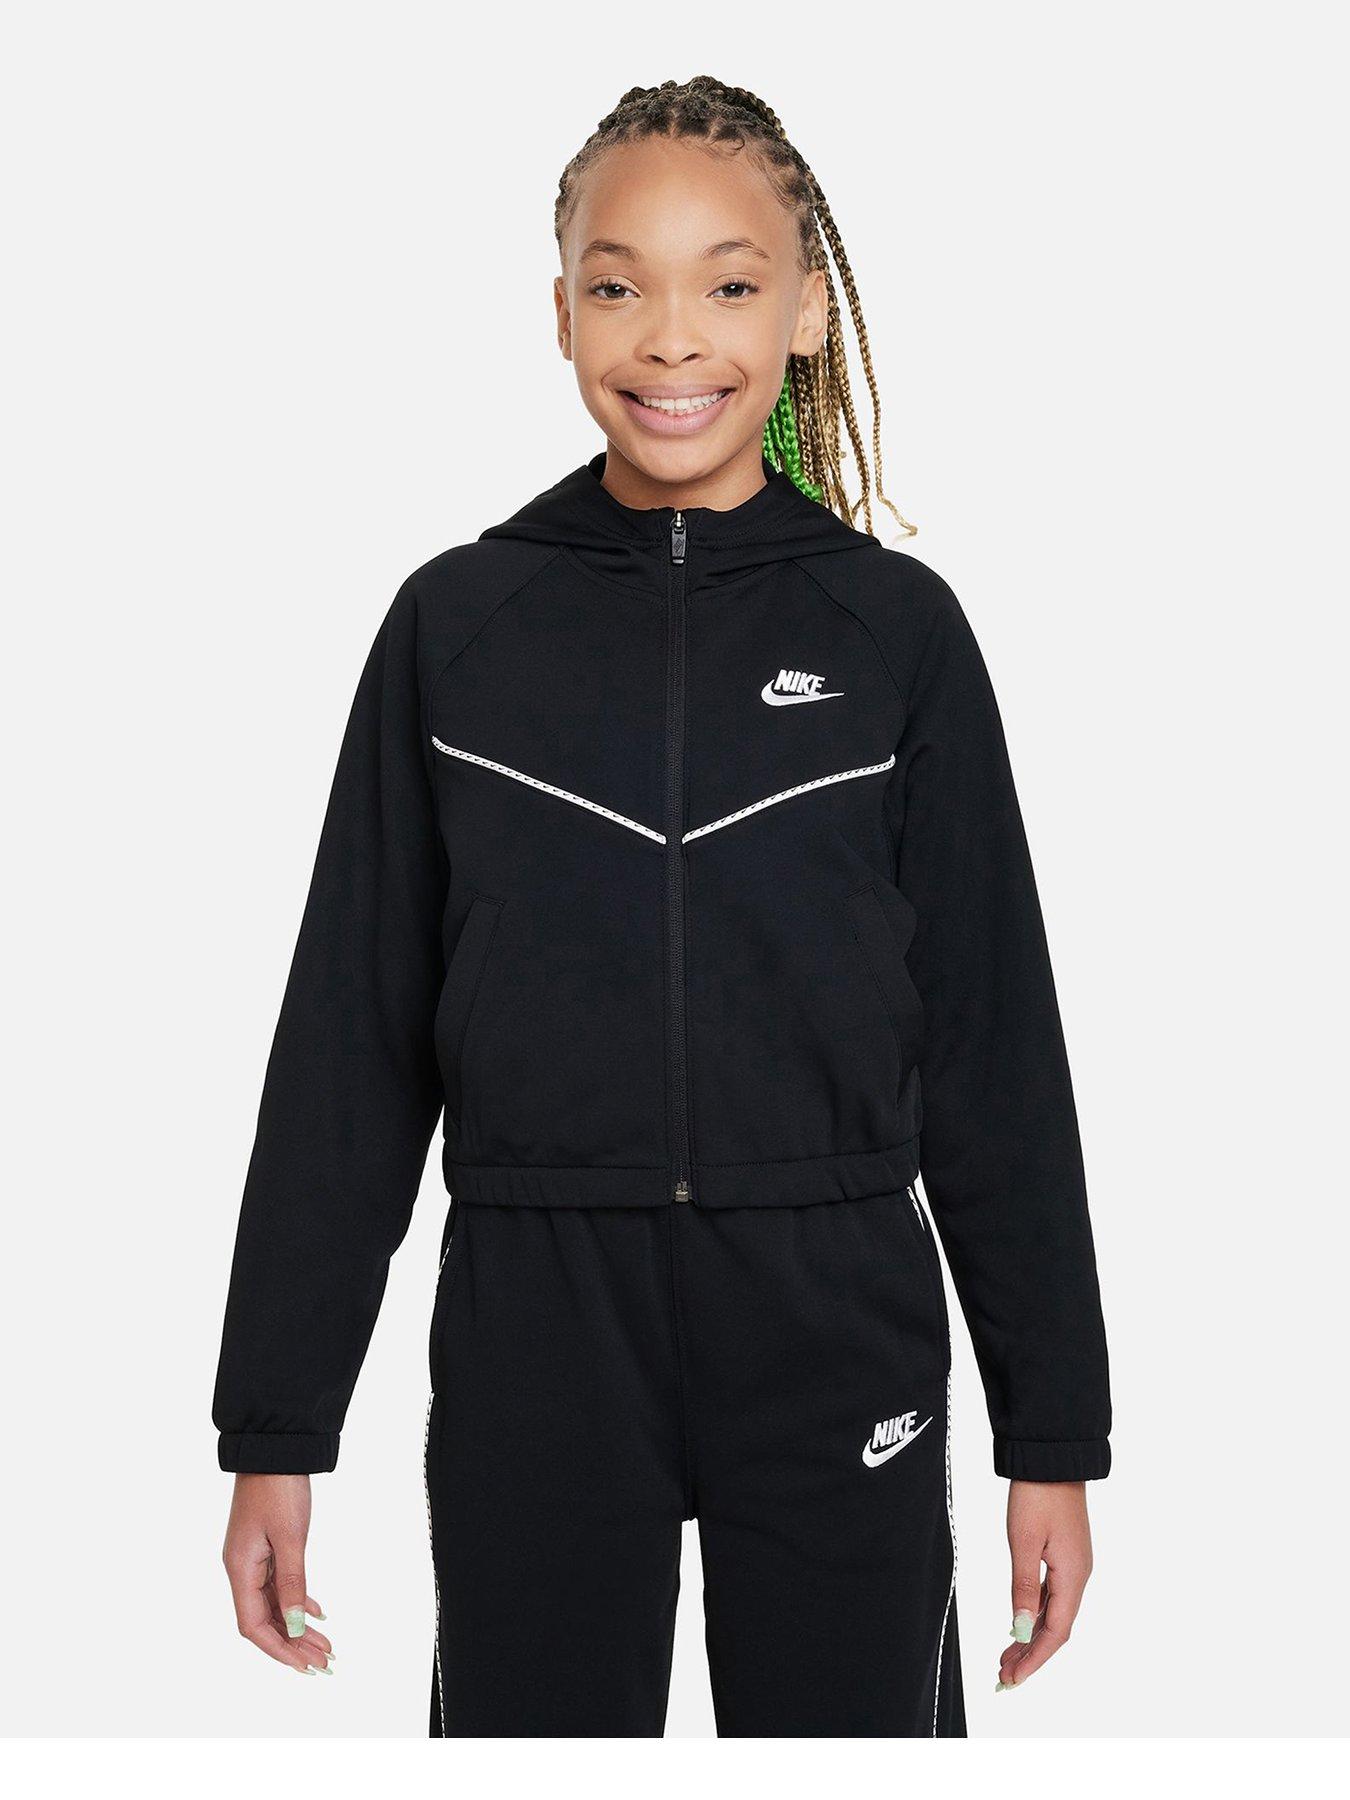 Girls Nike Tracksuits, Girls Activewear Sets